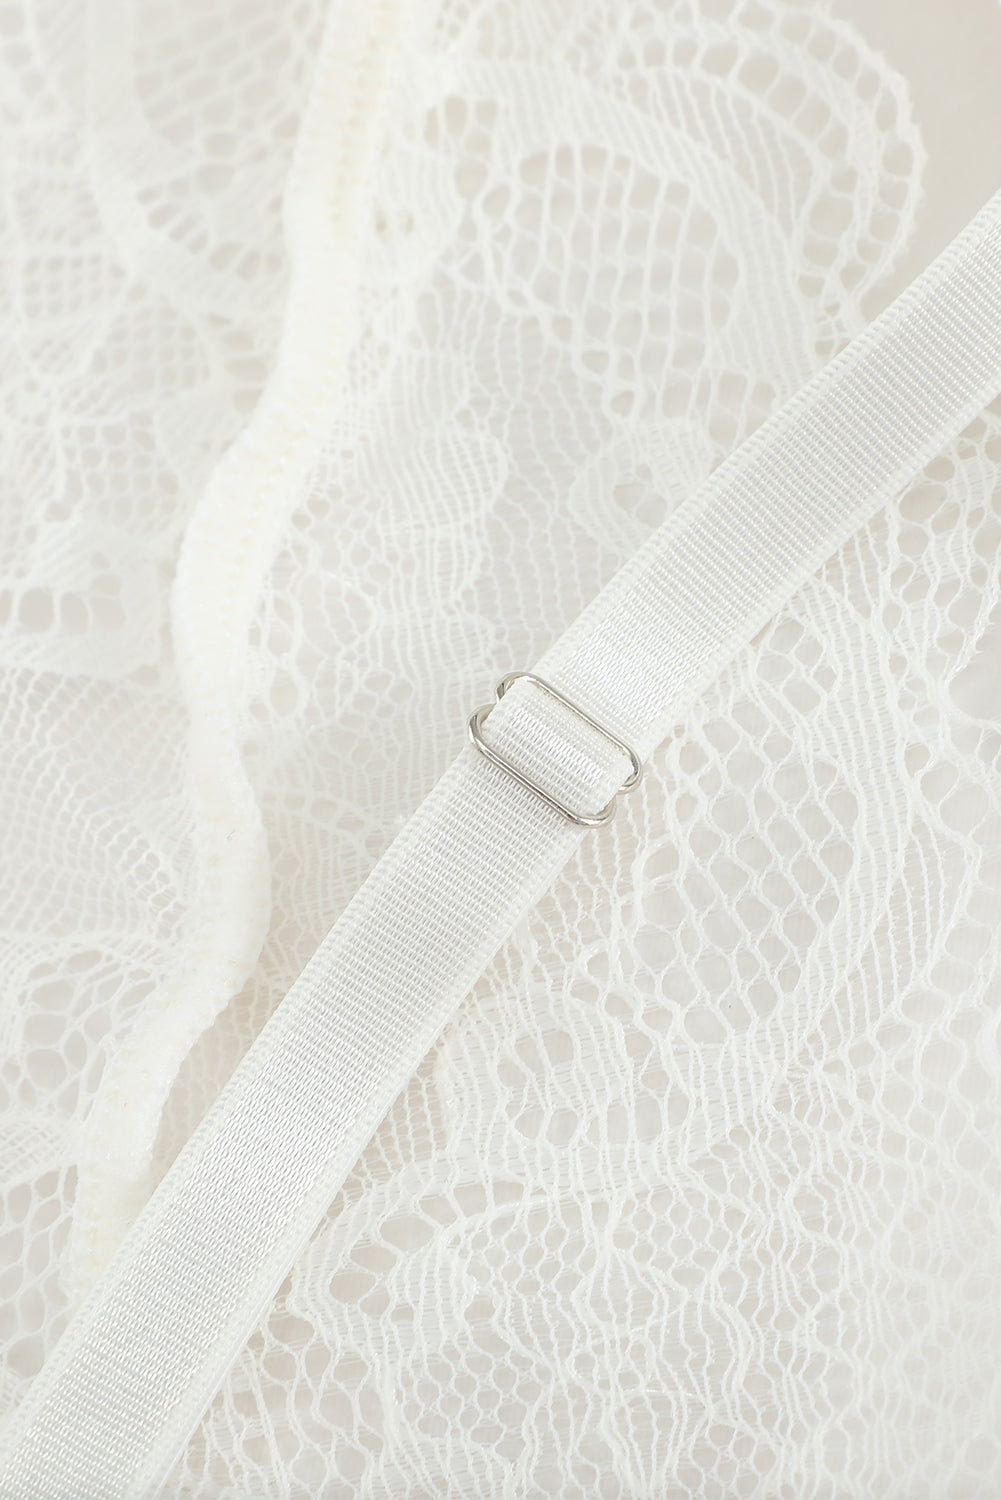 White Lace 3pcs Bra and Panty Sets